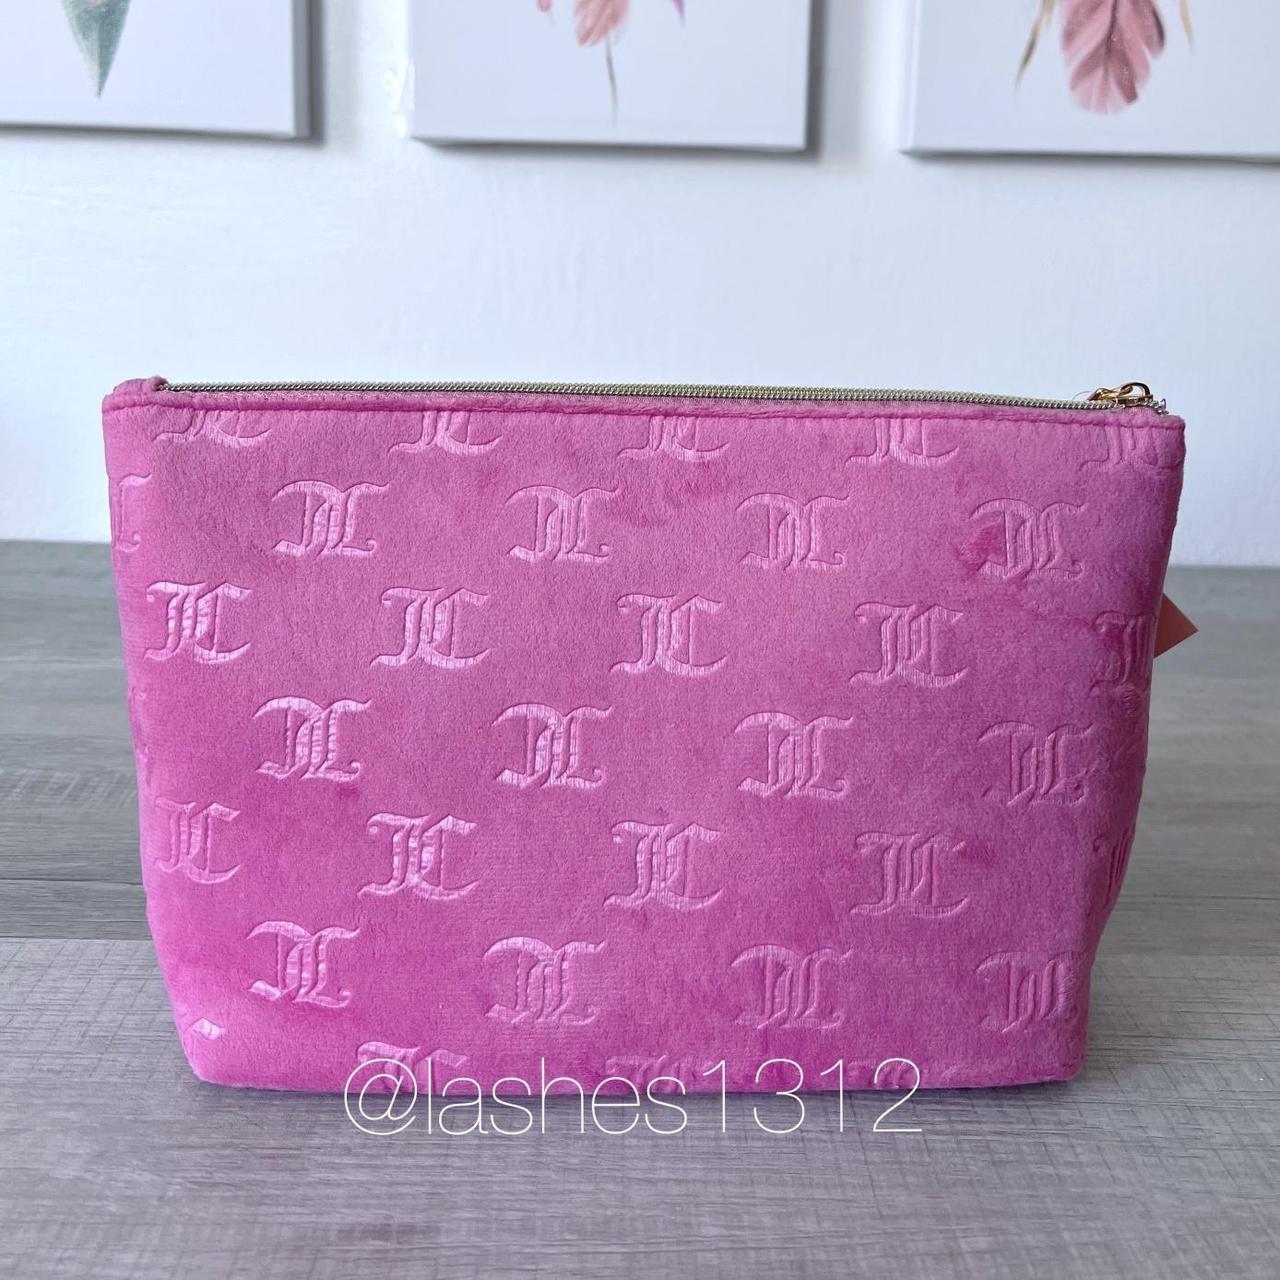 Juicy Couture Makeup Bag - Ultra soft pink velour w/ - Depop